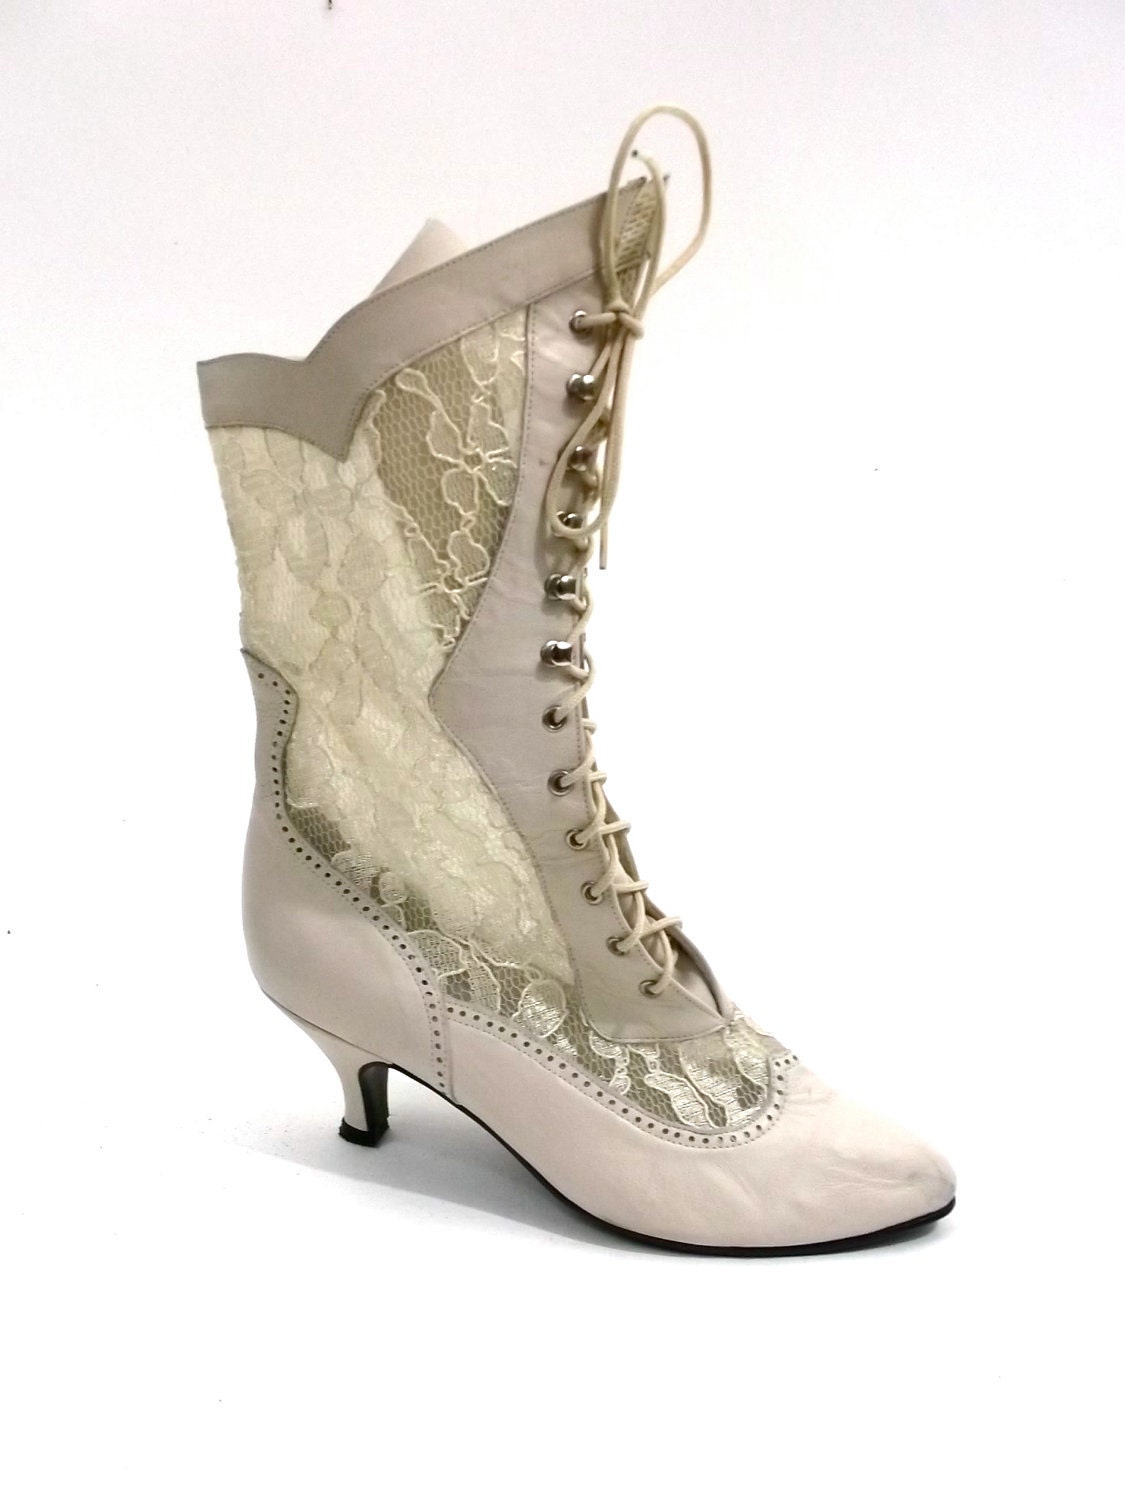 VICTORIAN style Granny Boot /// Cream color leather by nanometer